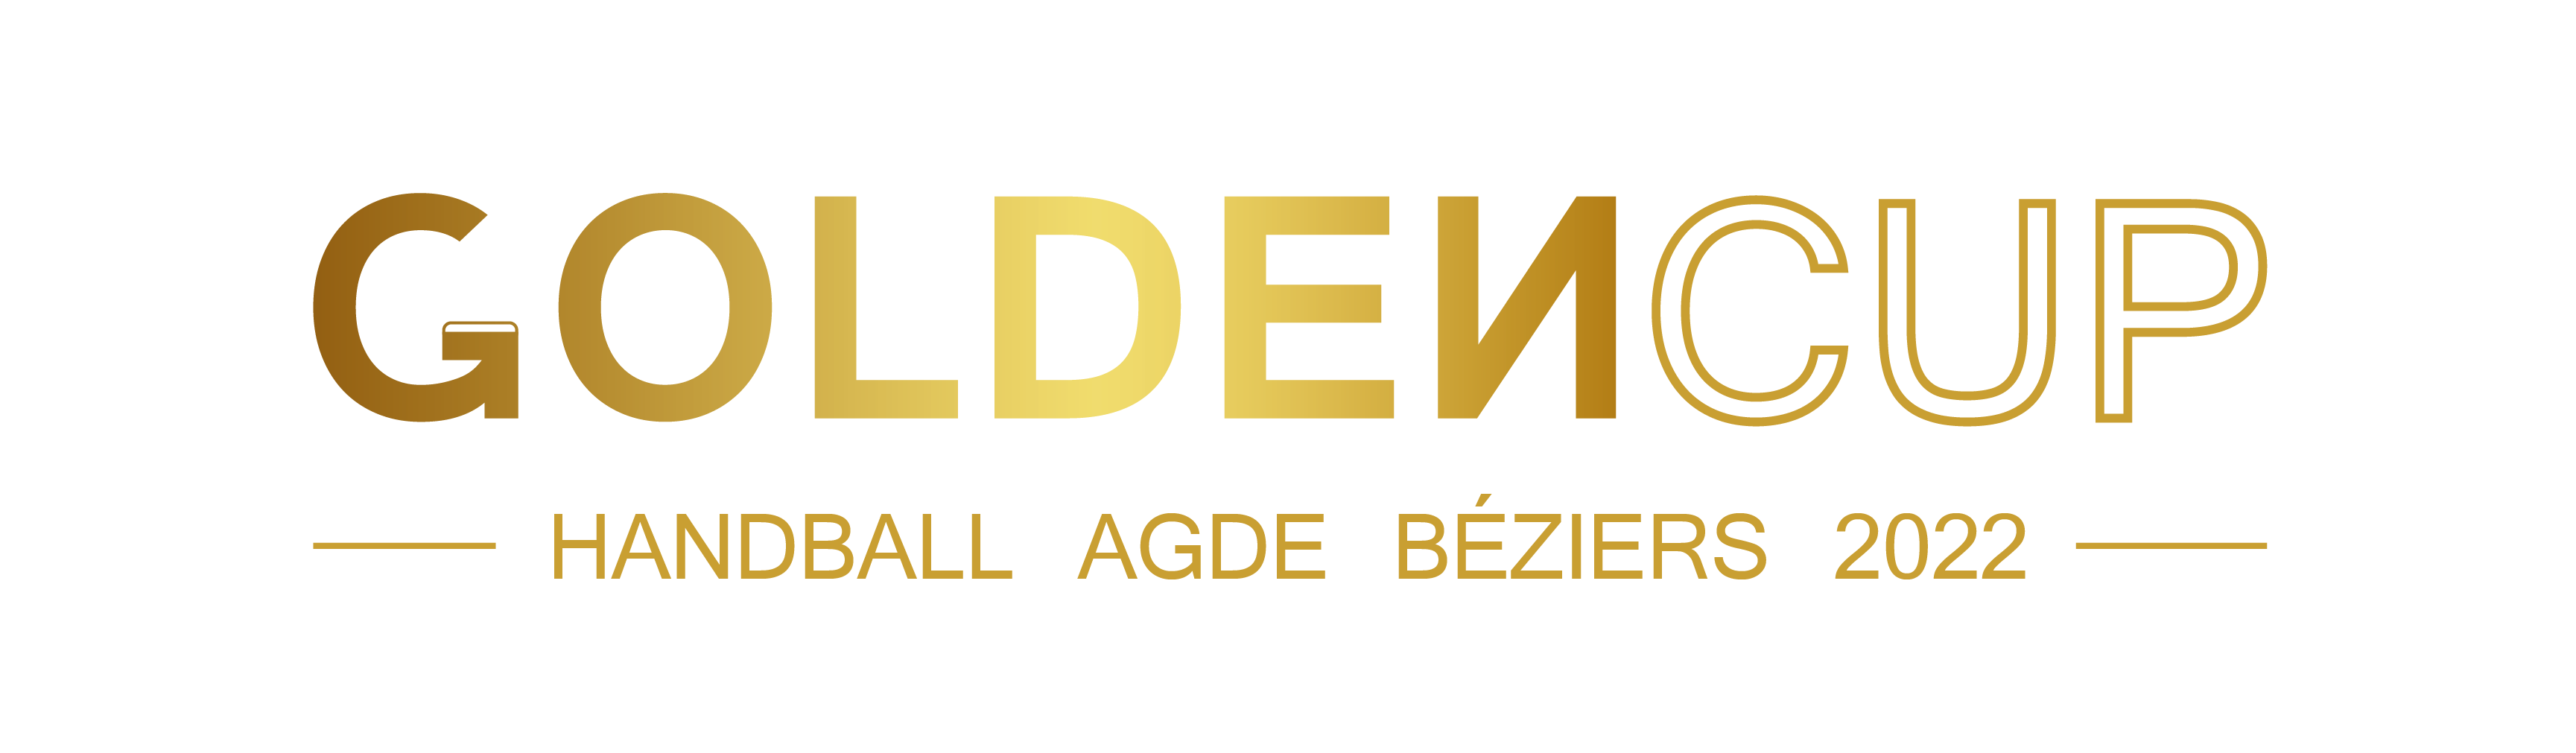 Logo Golden Cup Handball Agde 2022, tournoi international de handball qui aura lieu en avril 2022